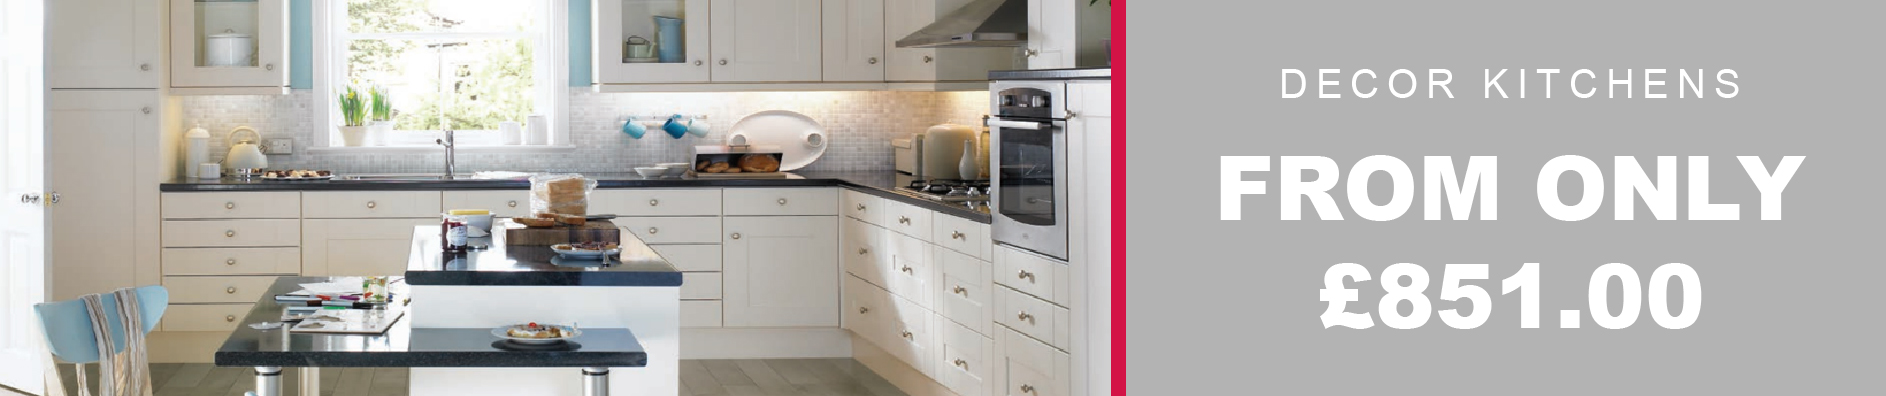 Buy Kitchen Appliances Online | Paul Davies Kitchens & Appliances